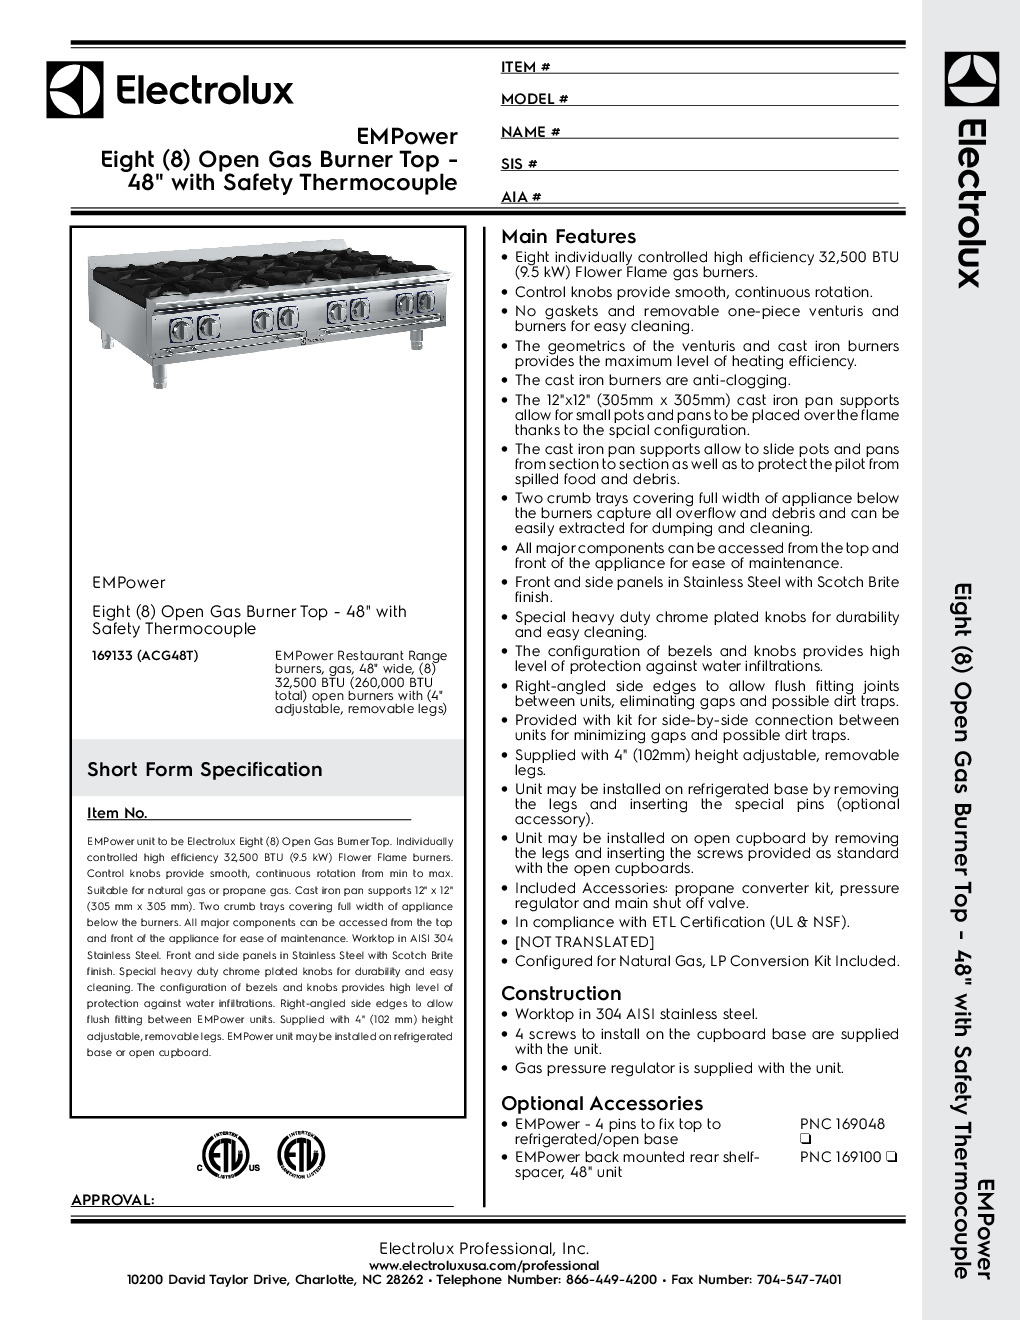 Electrolux 169133 Gas Countertop Hotplate